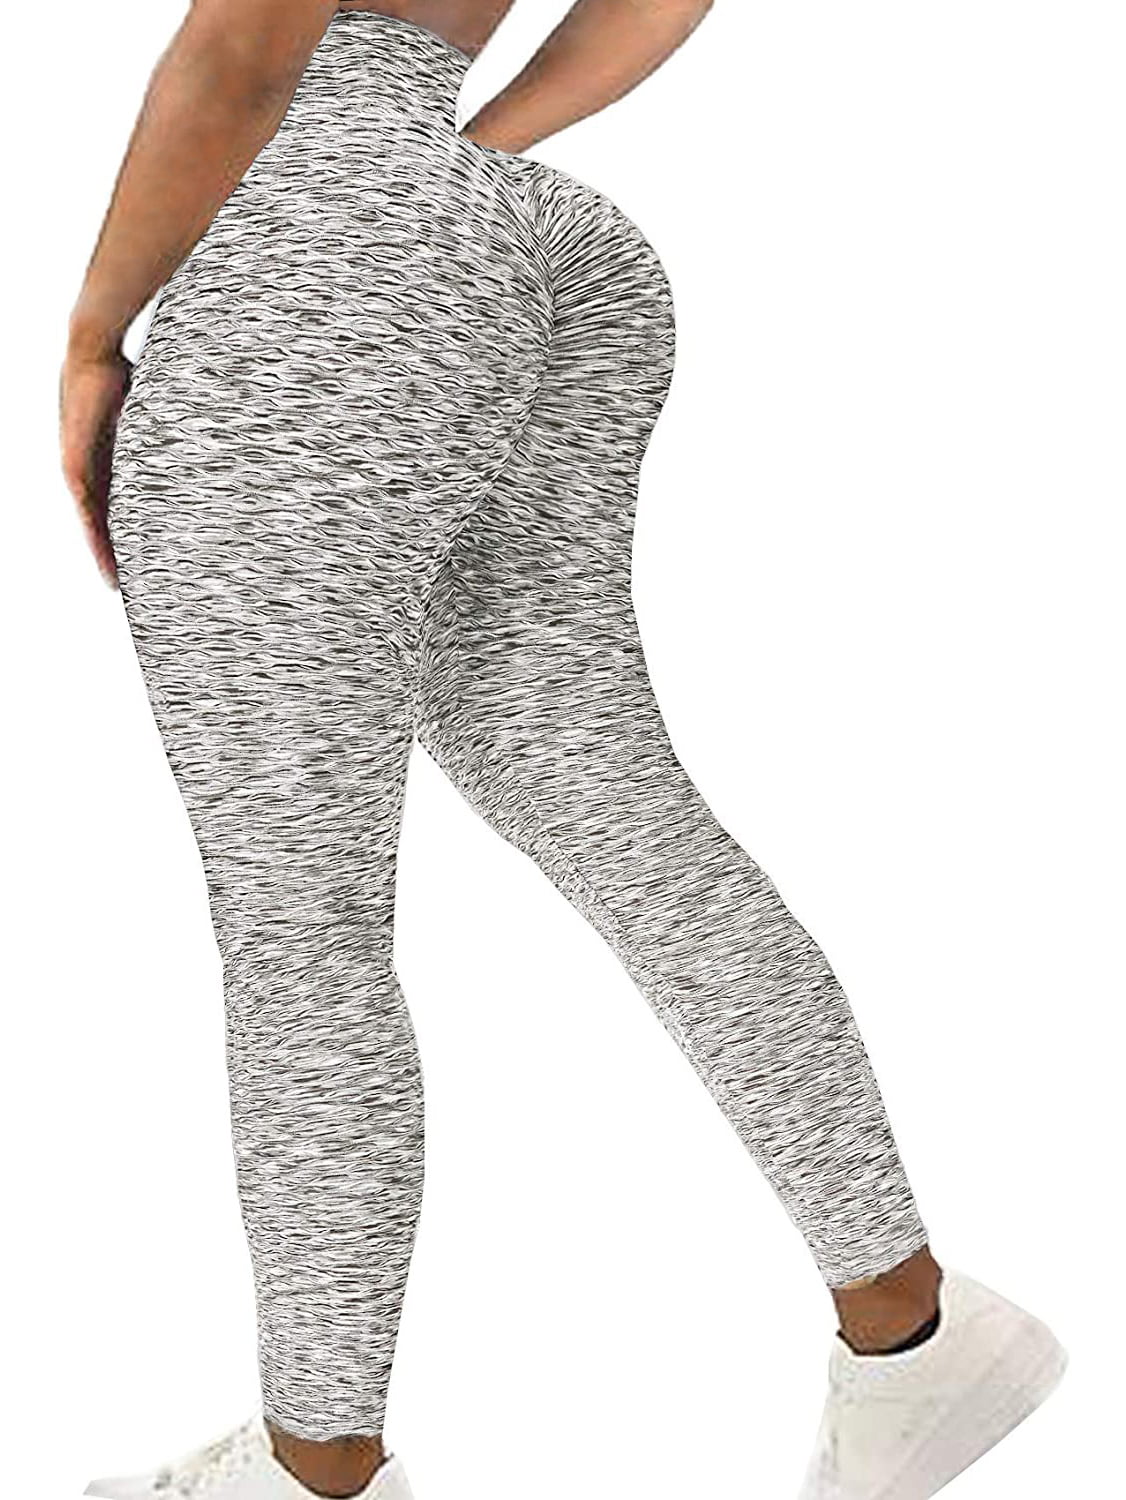 Buy A AGROSTE Women's High Waist Yoga Pants Tummy Control Workout